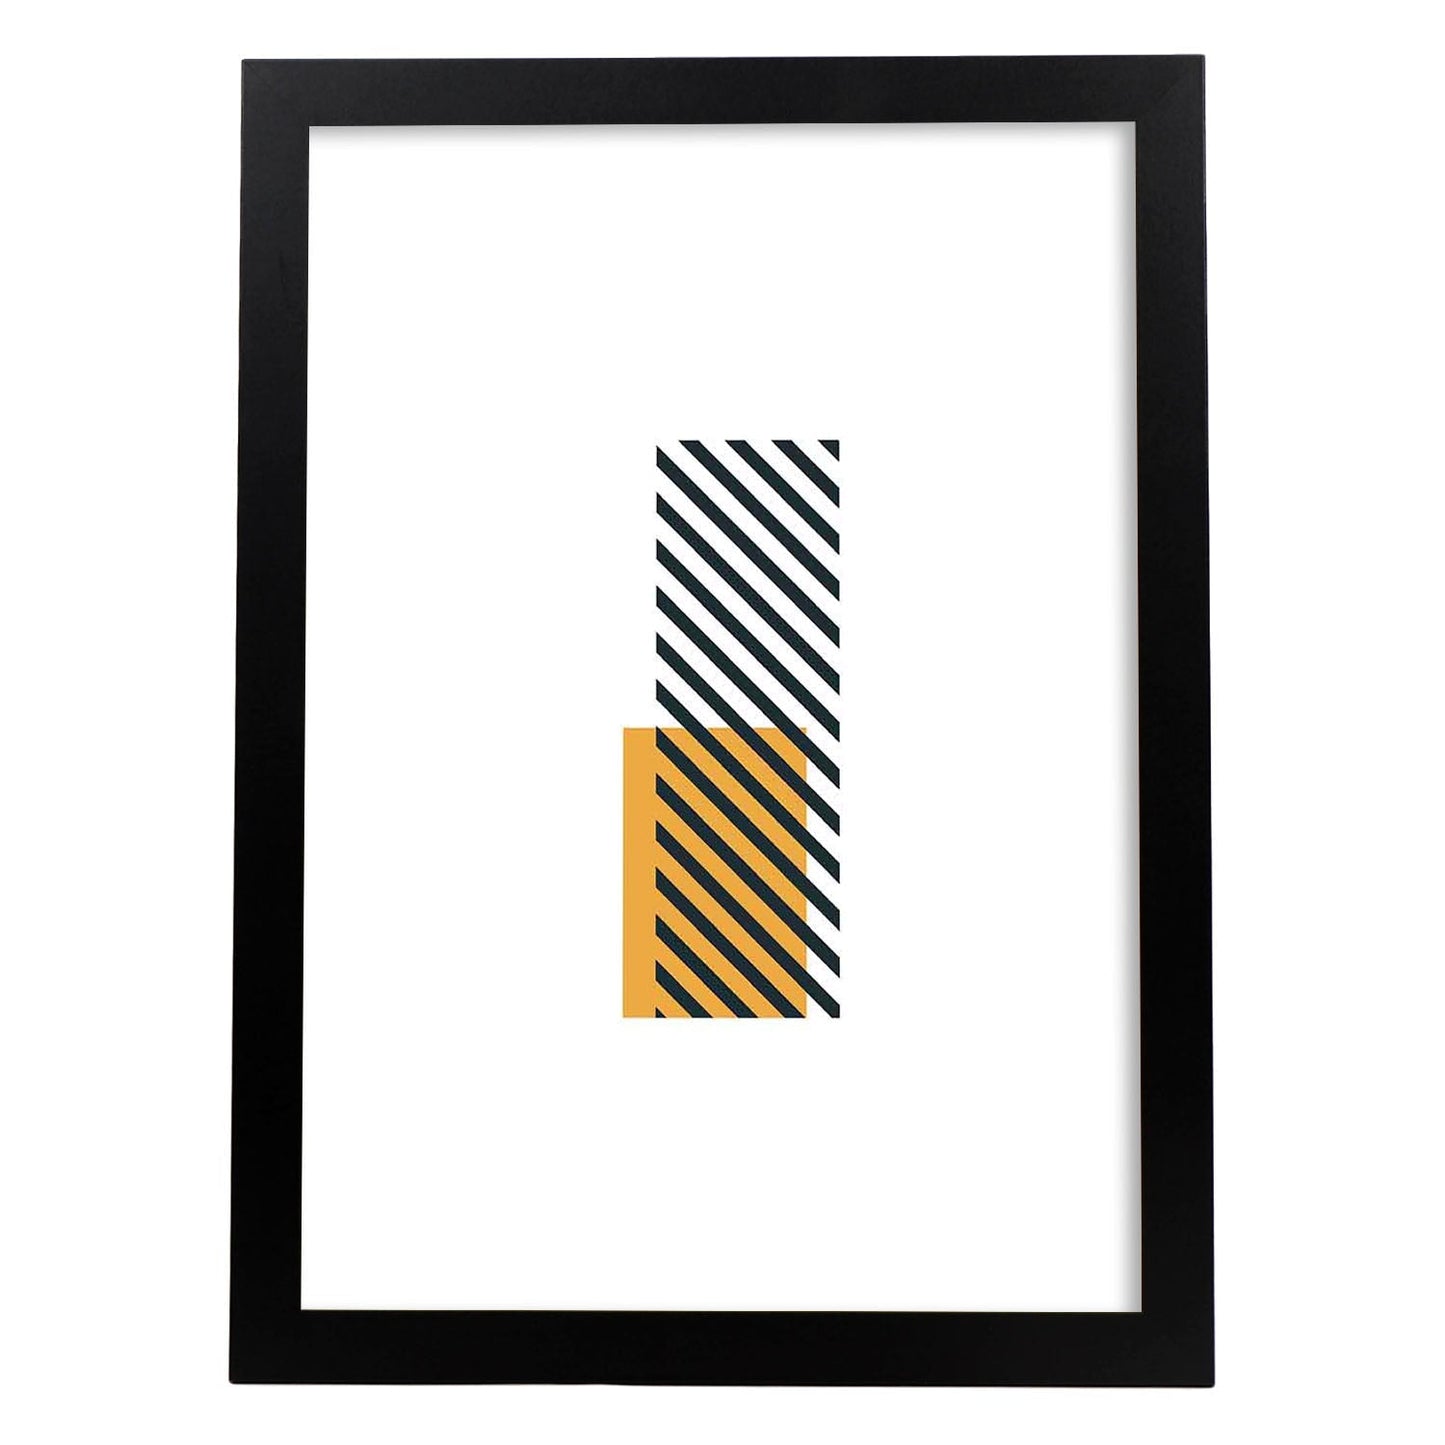 Poster de letra I. Lámina estilo Geometria con imágenes del alfabeto.-Artwork-Nacnic-A3-Marco Negro-Nacnic Estudio SL